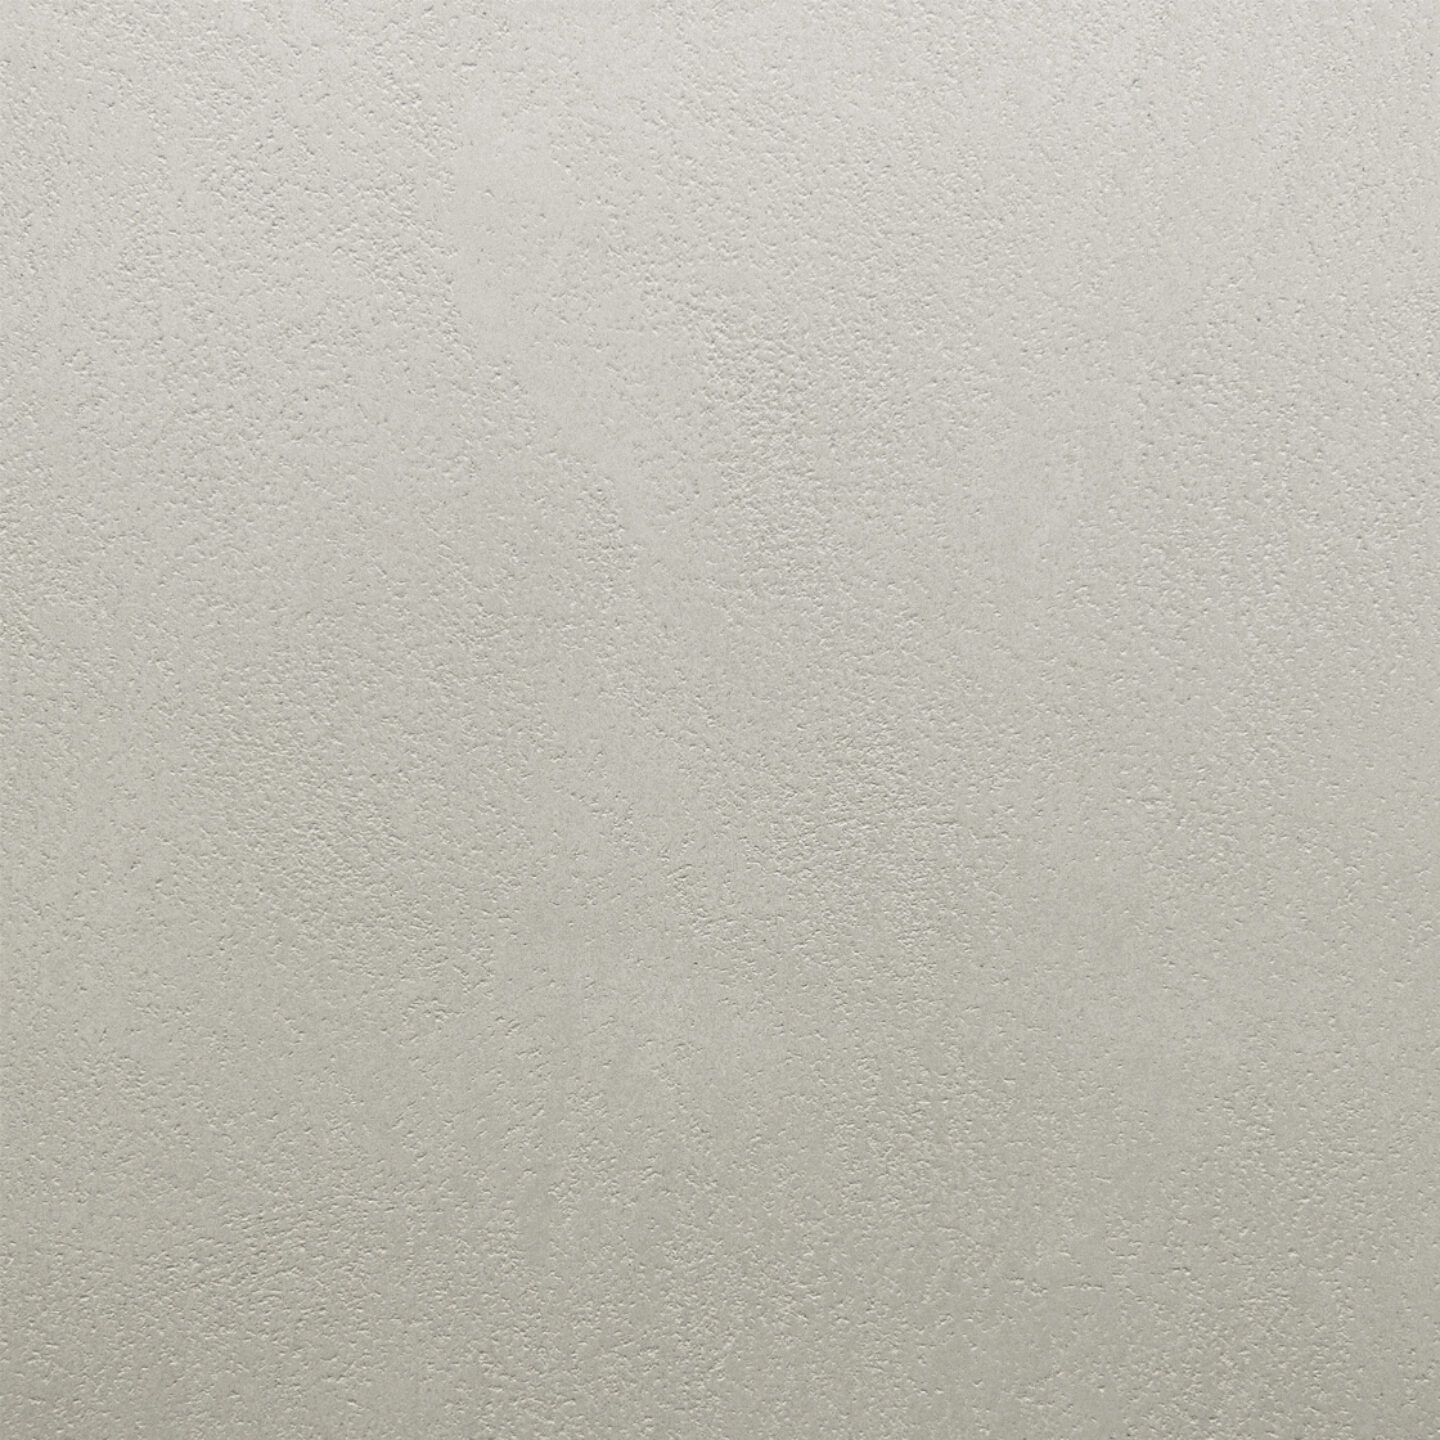 Close up of Armourcoat leatherstone exterior polished plaster finish - 17